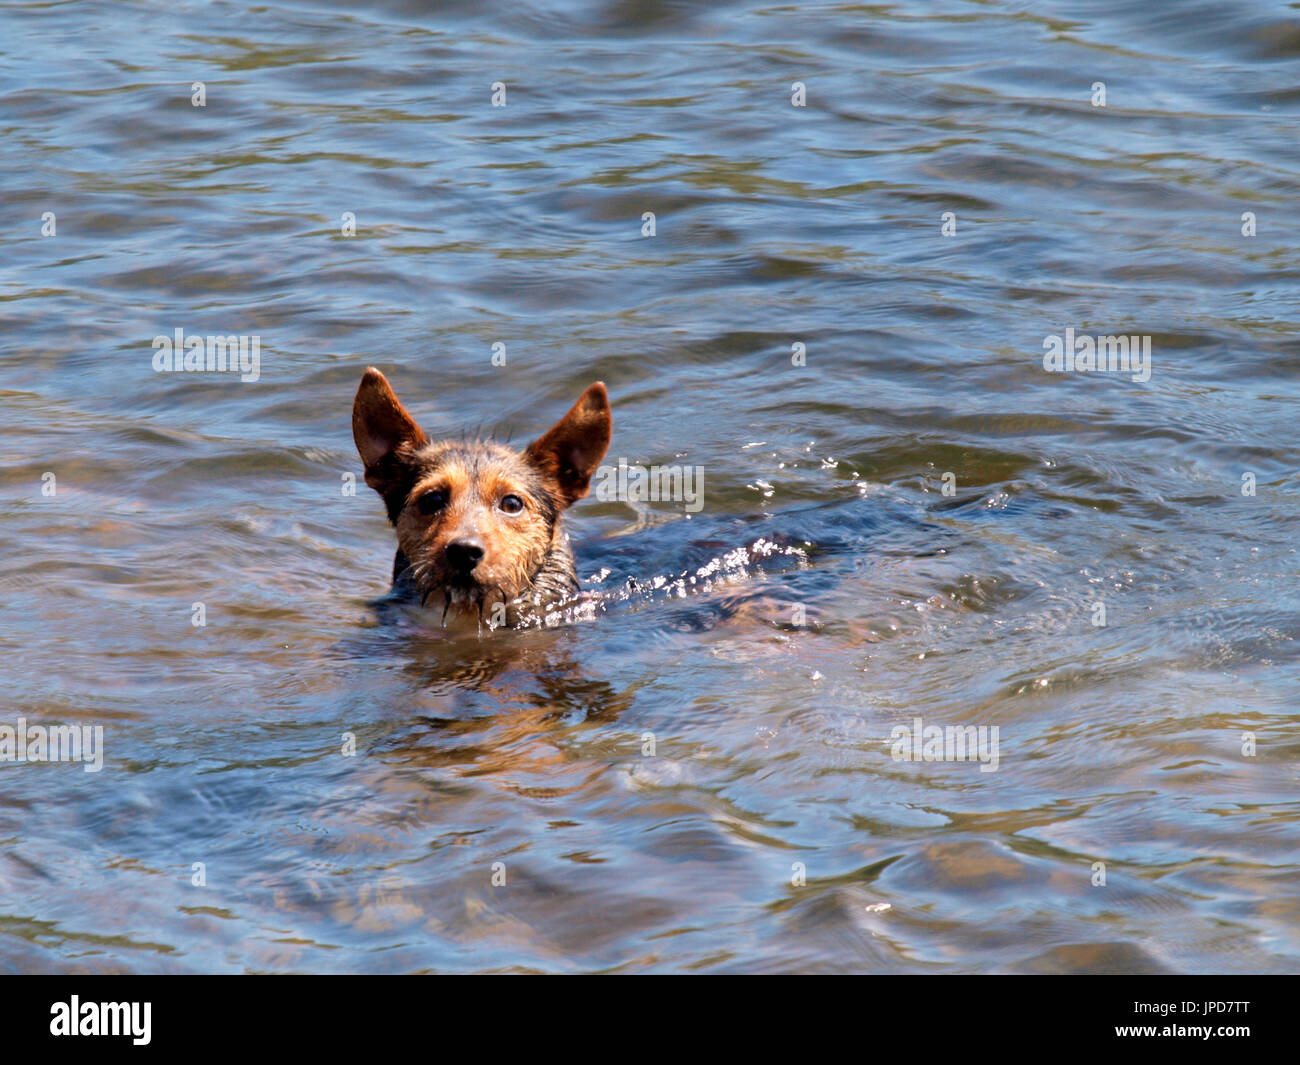 Cute little dog swimming in a lake, UK Stock Photo